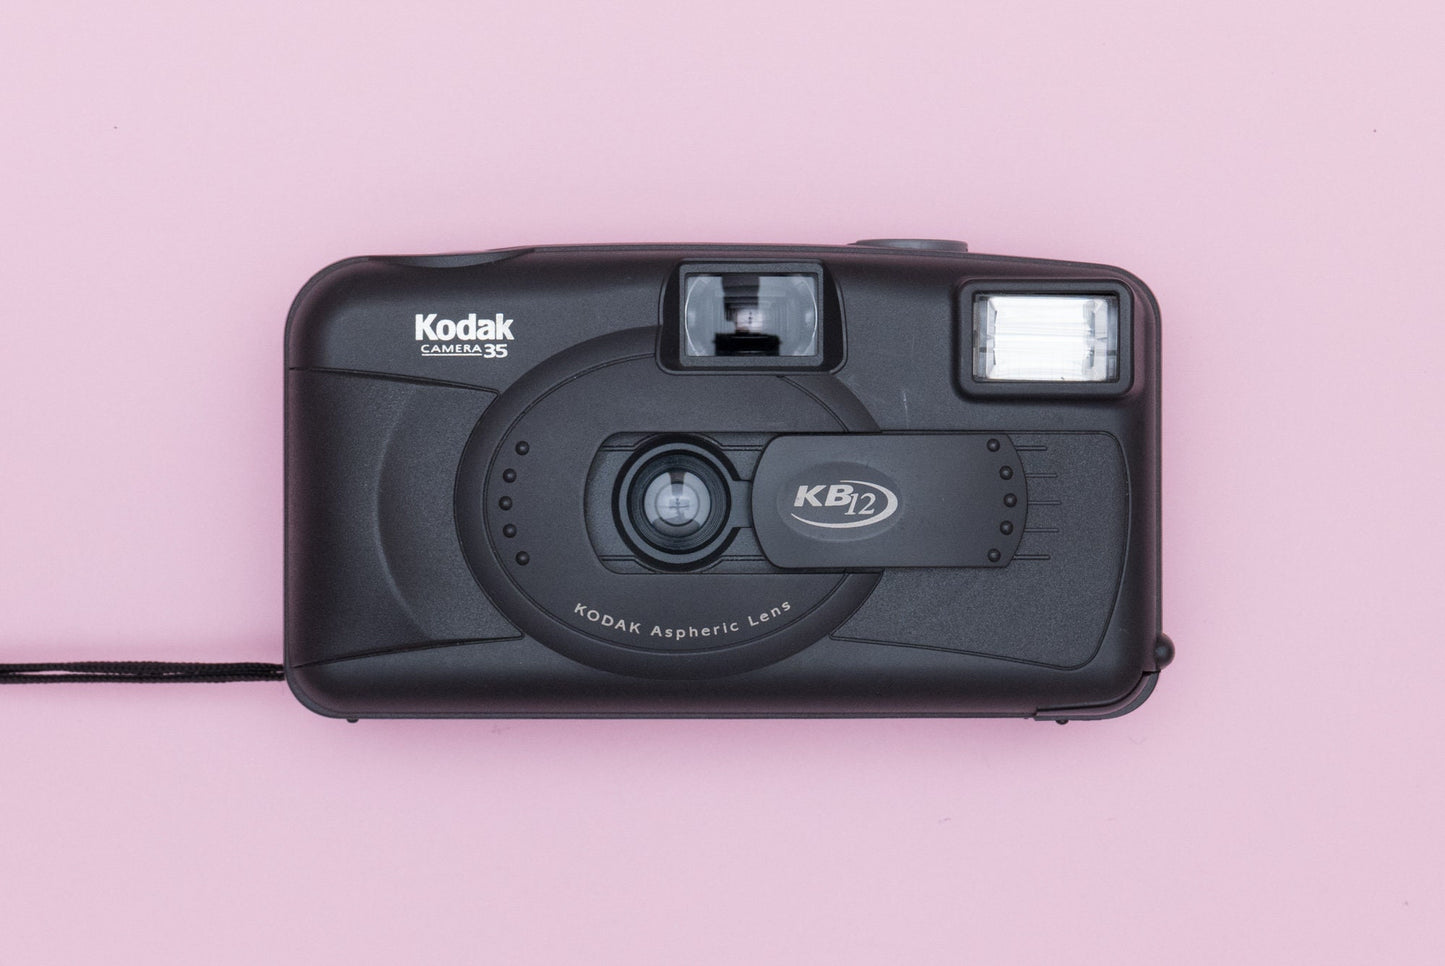 Kodak KB 12 35mm Compact Point and Shoot Film Camera